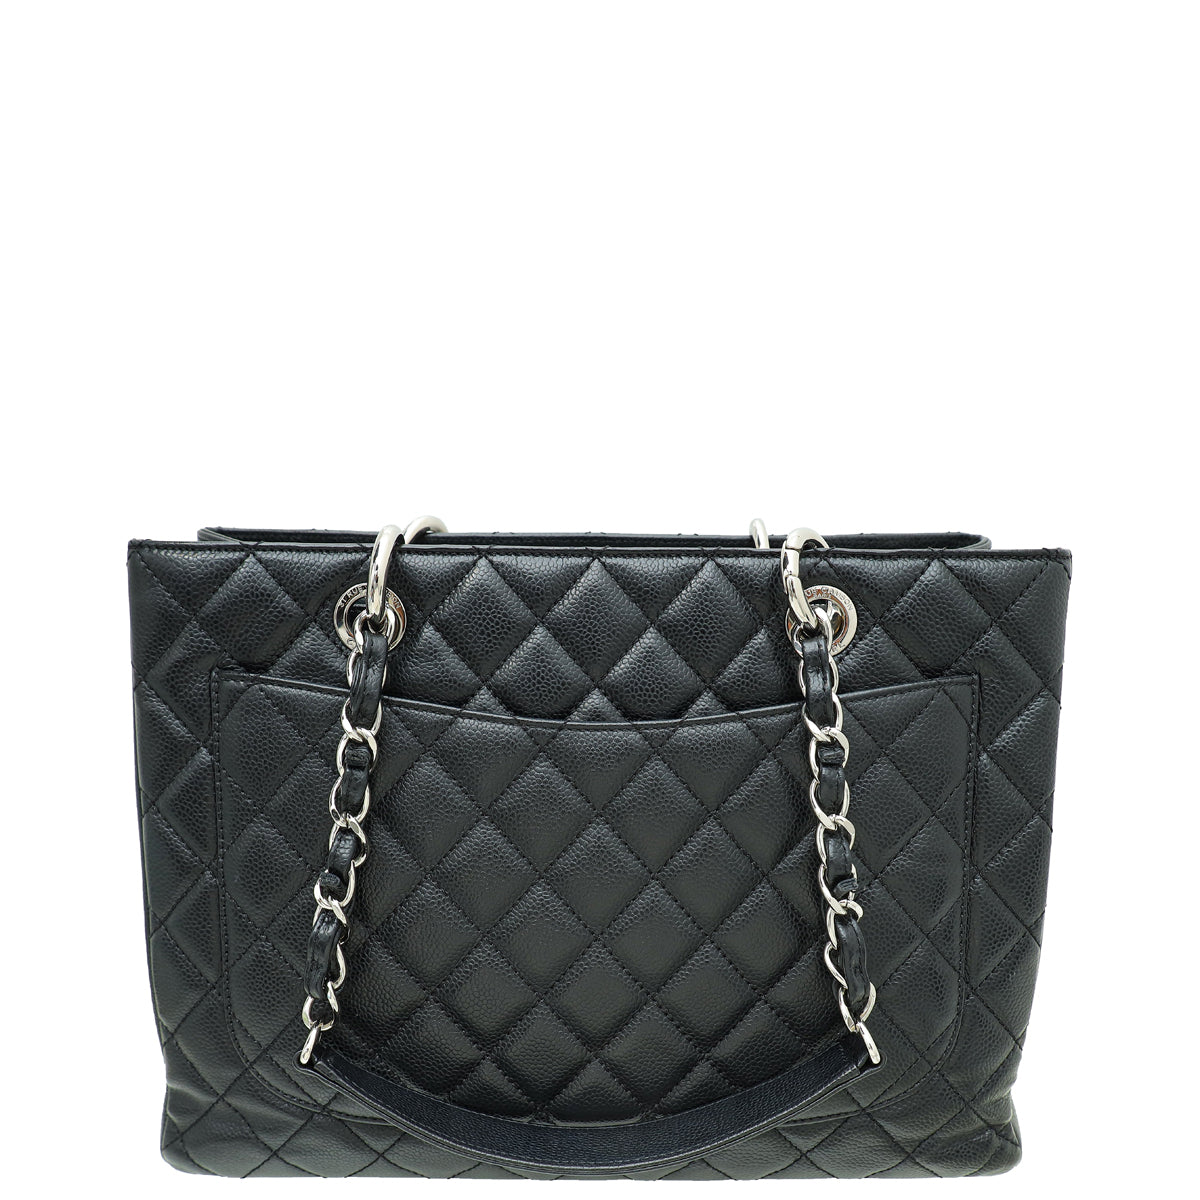 Chanel Black CC GST Medium Tote Bag